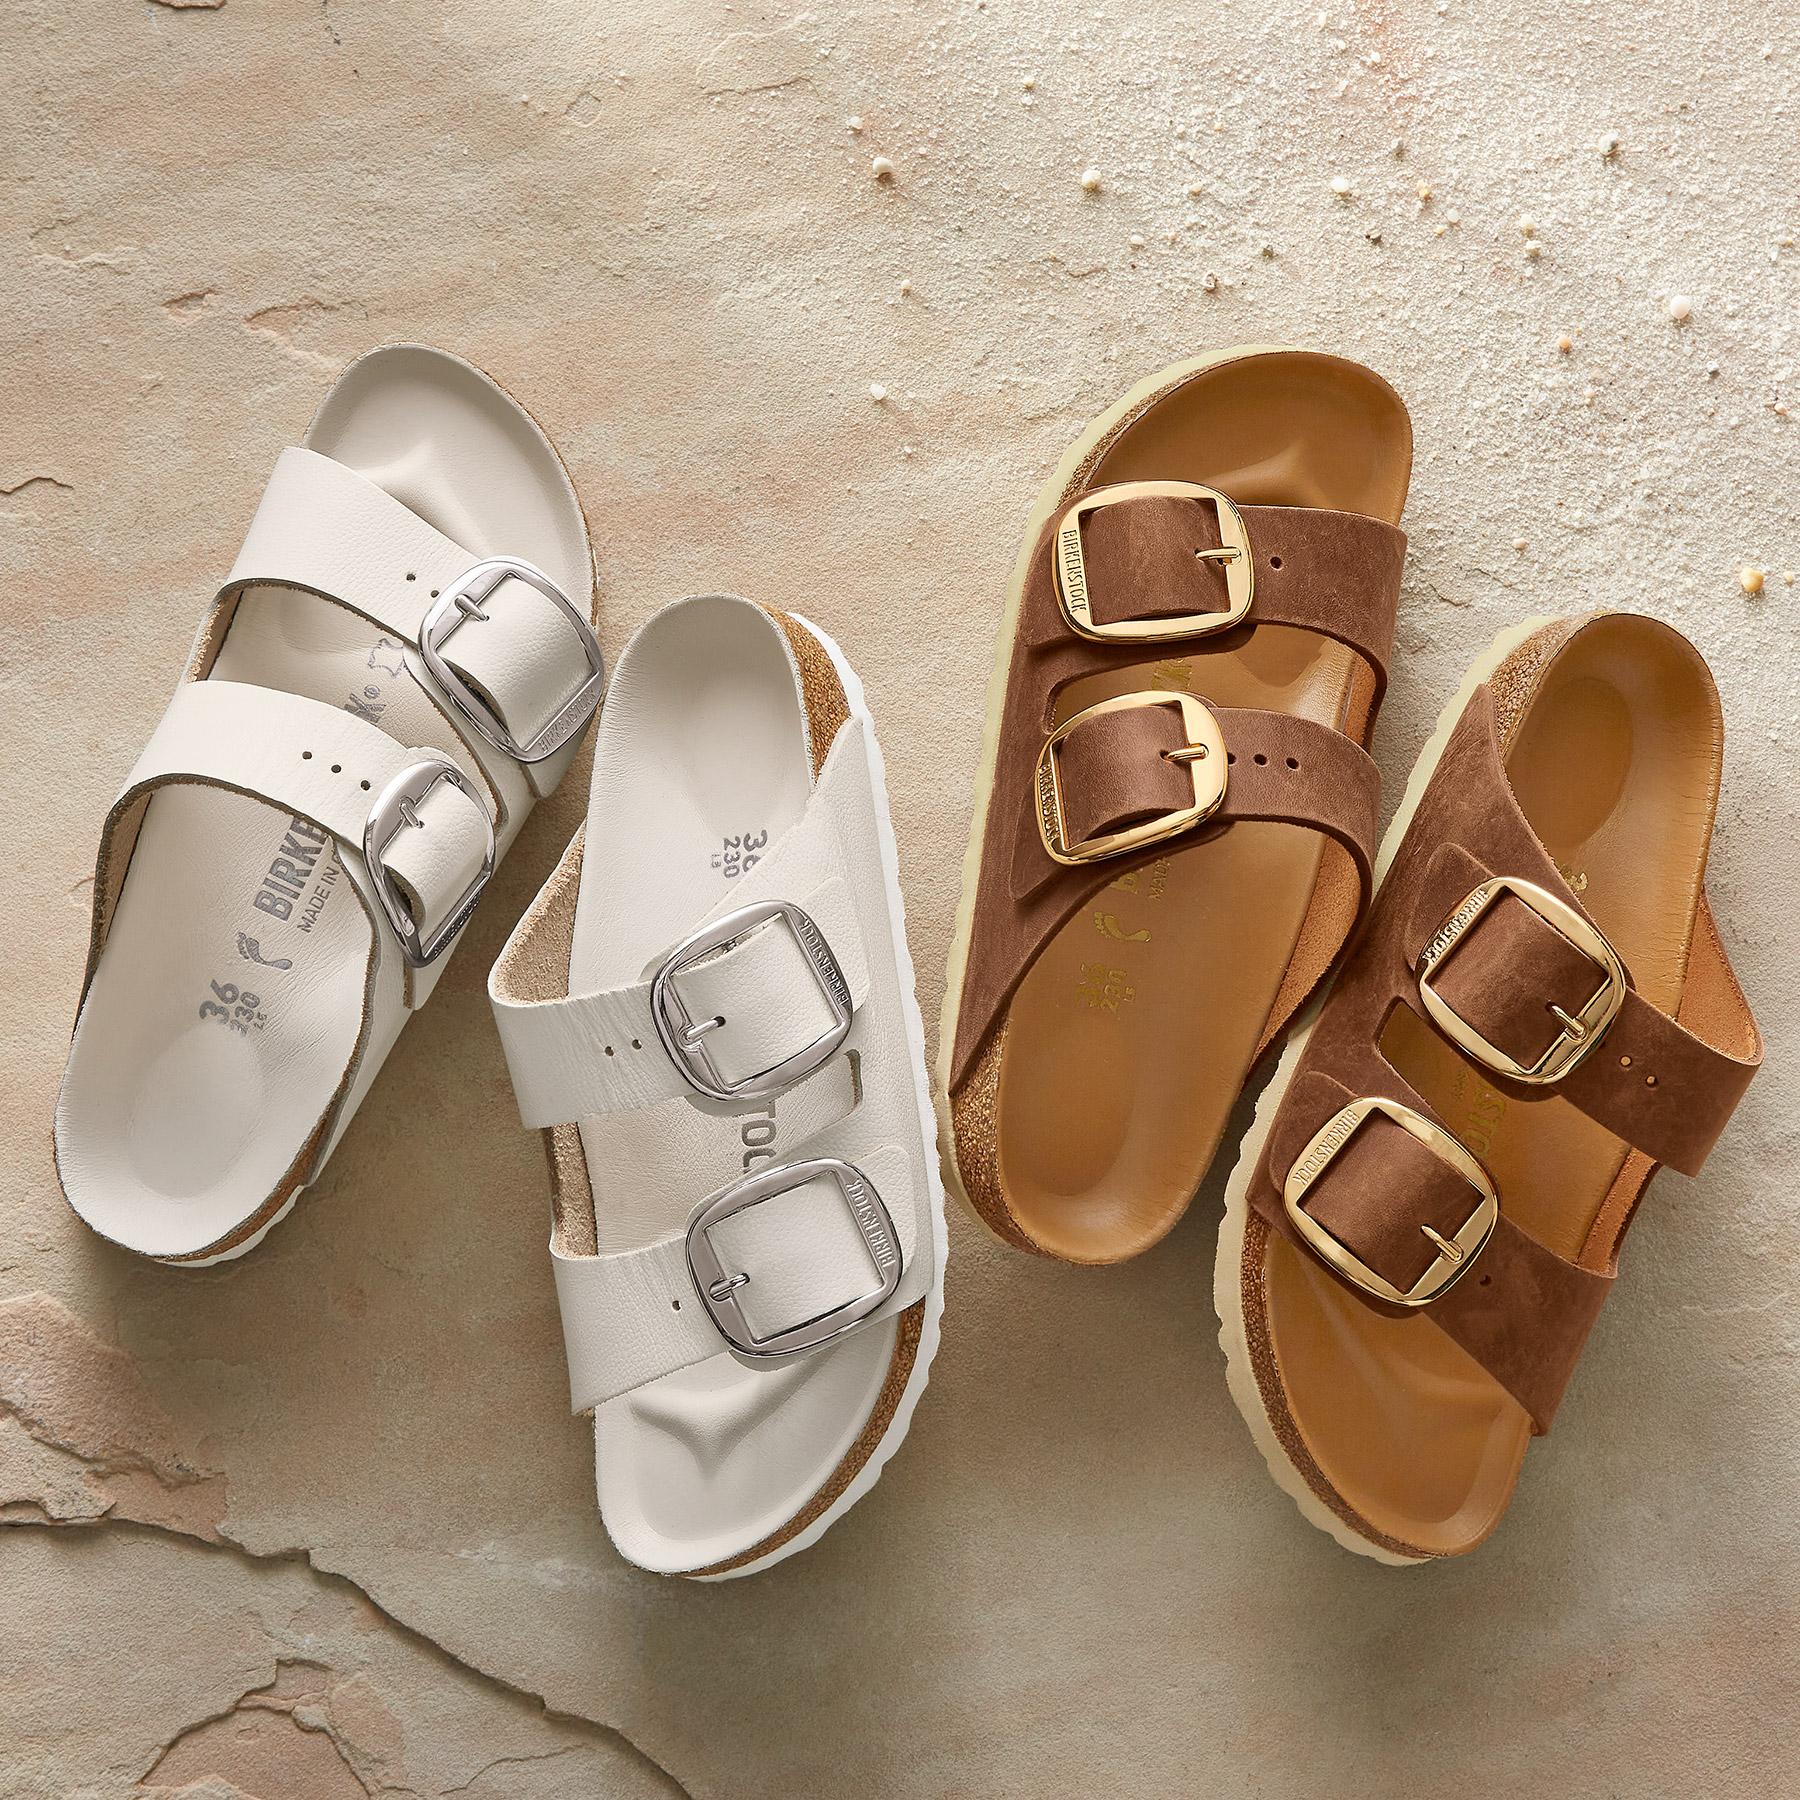 Birkenstock Women's 'Arizona Big Buckle' Slides - White - Flat Sandals - 38